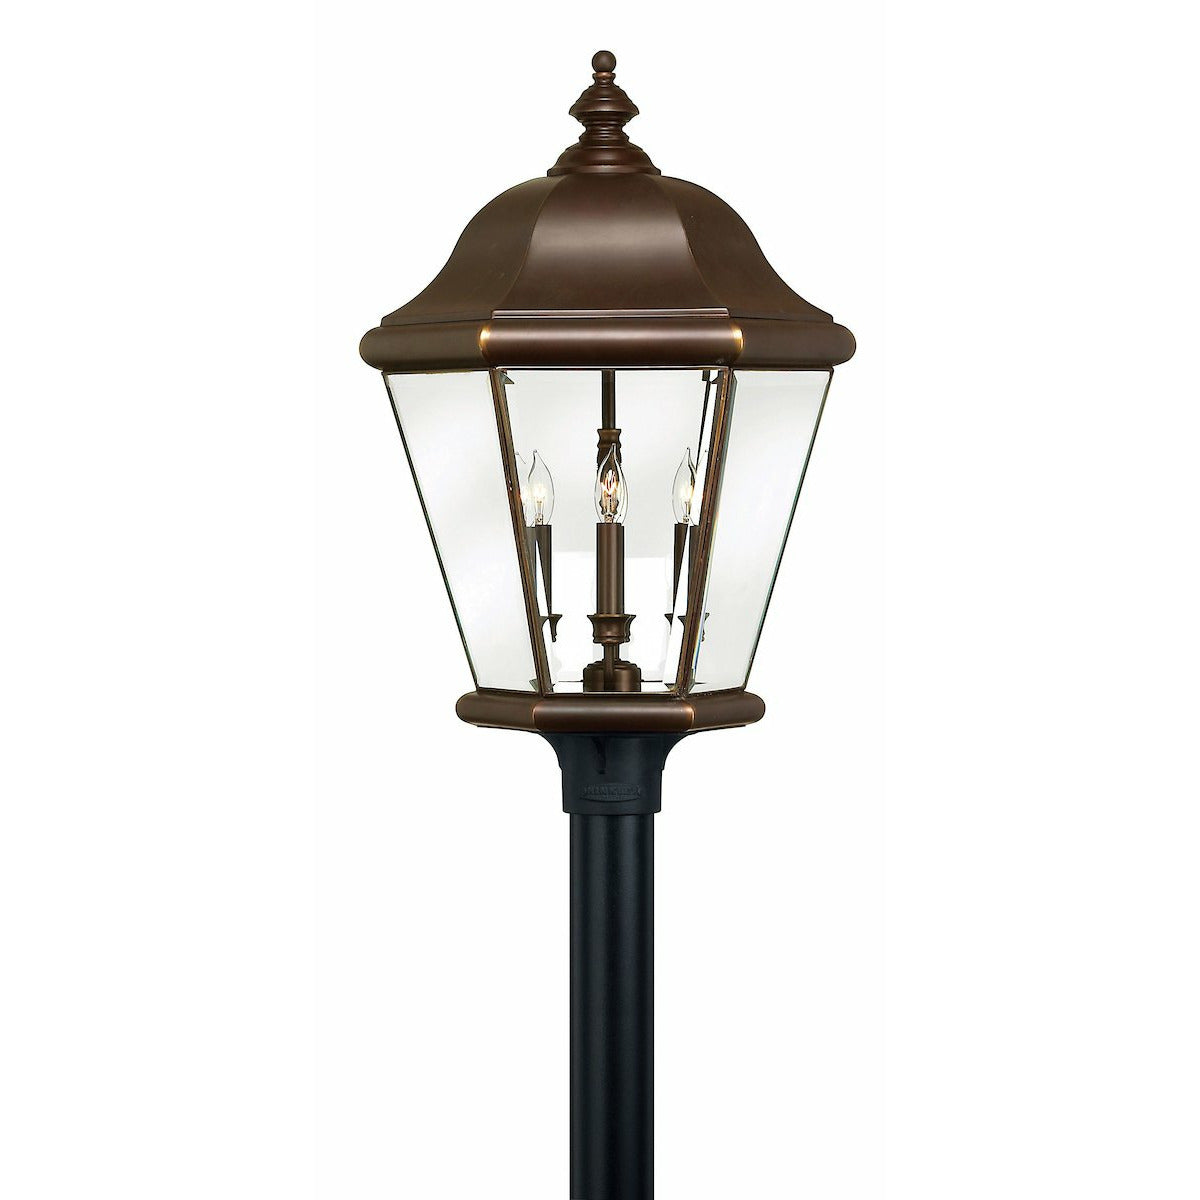 Clifton Park Post Light Copper Bronze